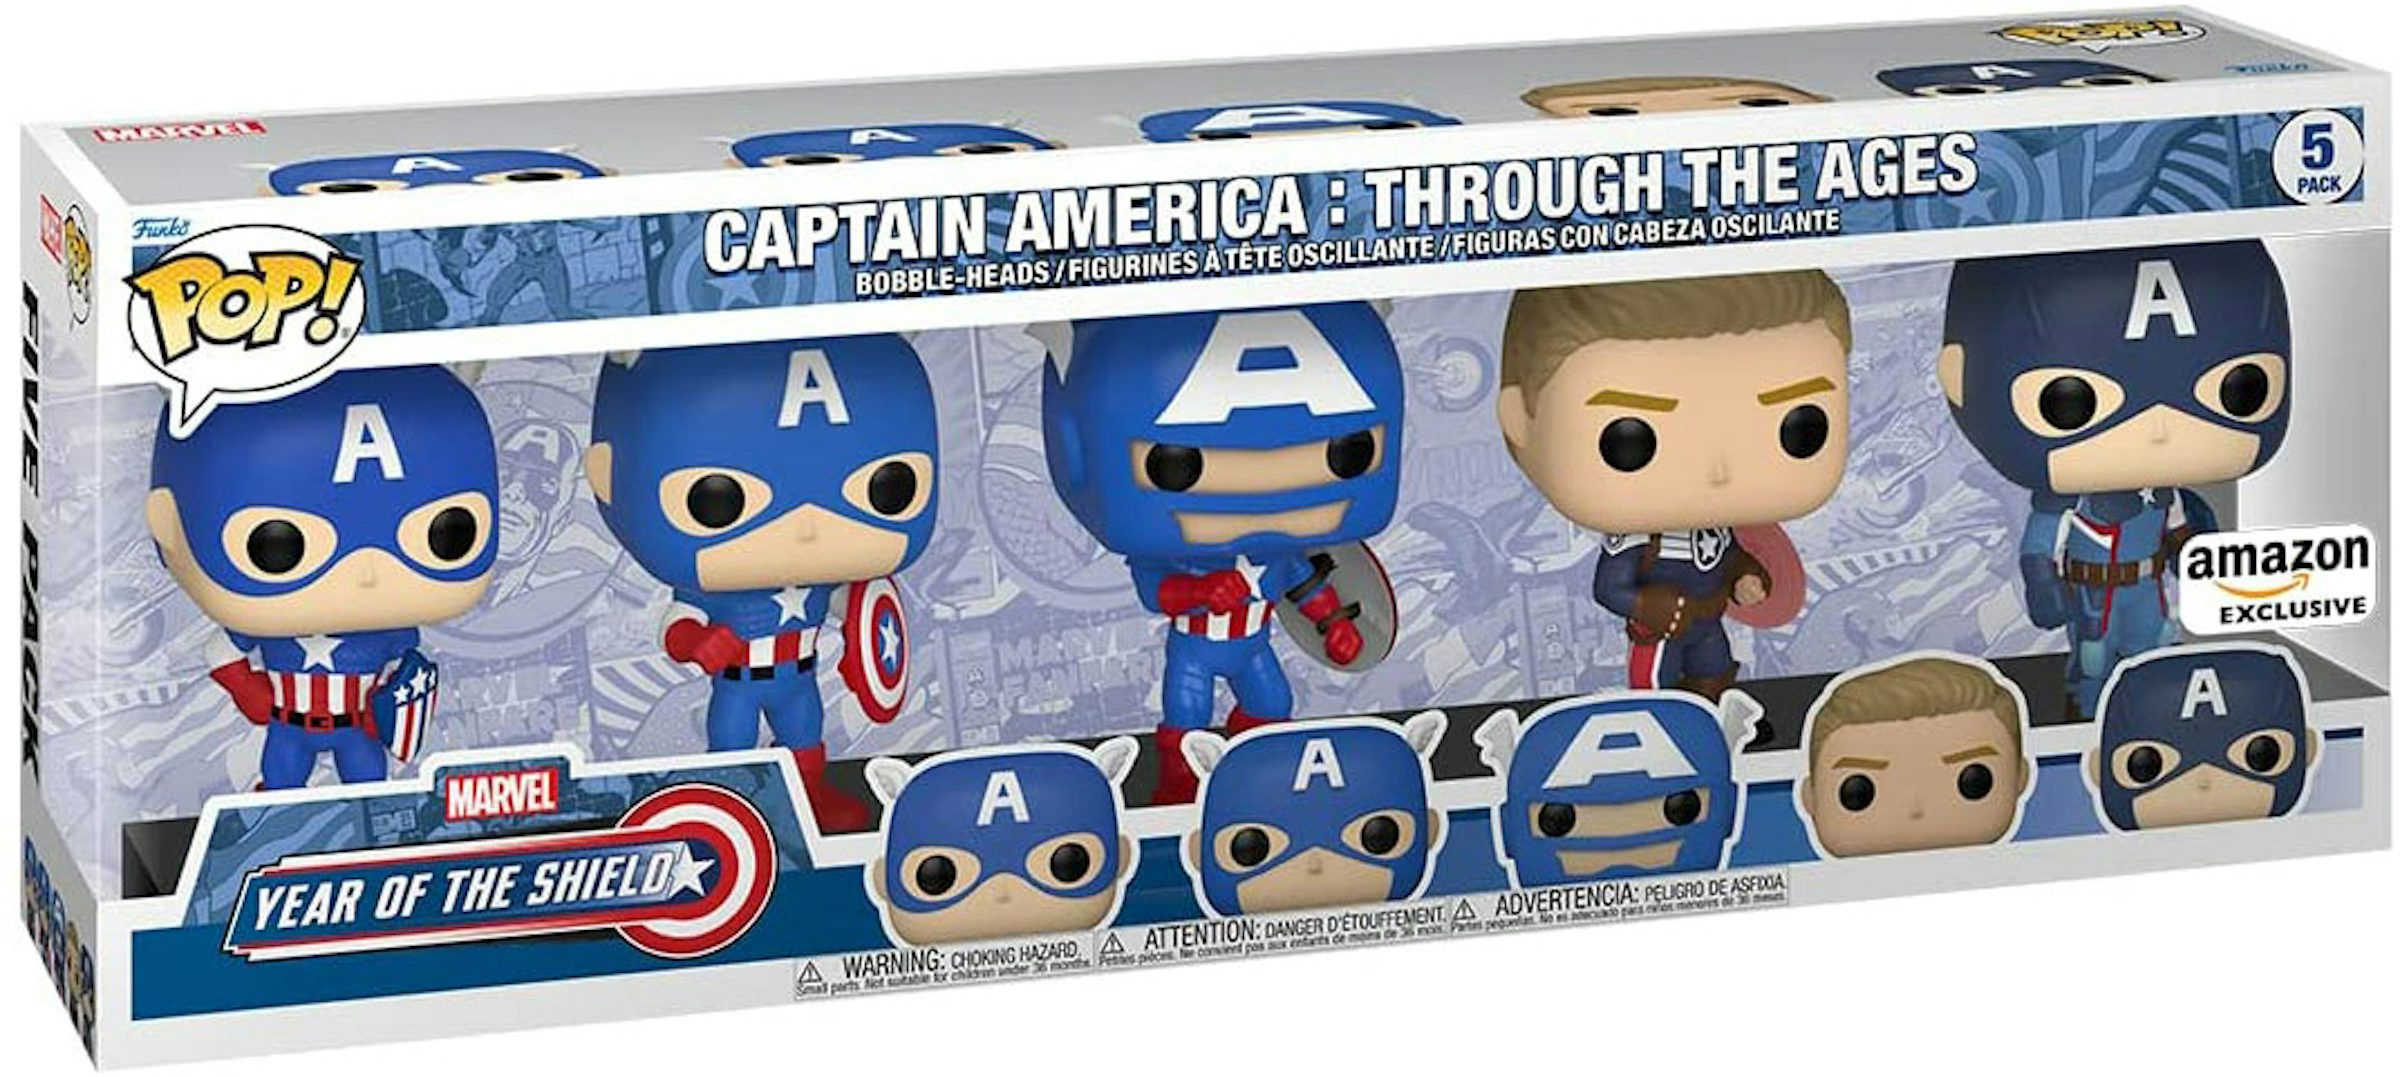 Buy Pop! Captain America at Funko.